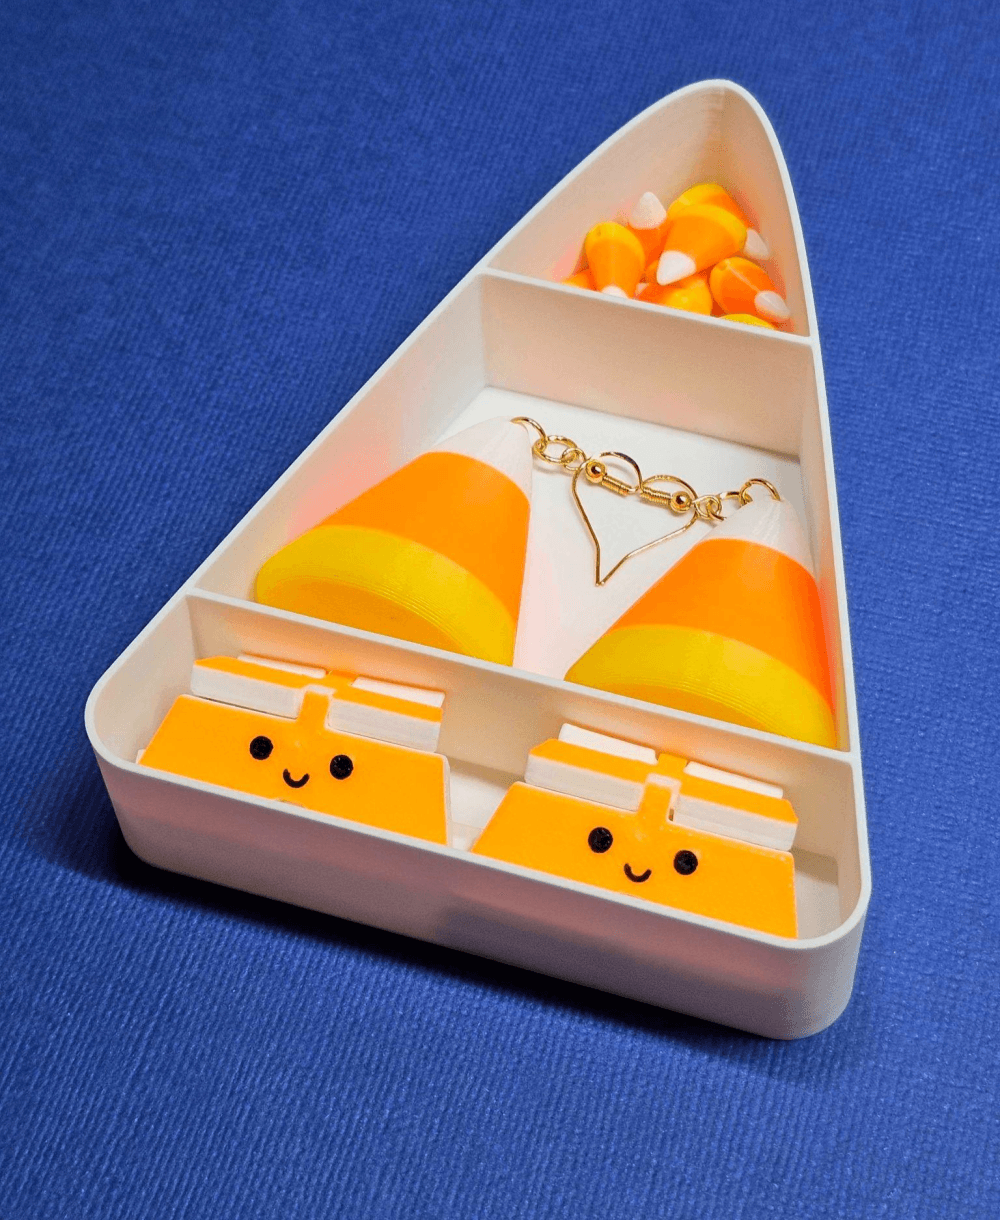 Candy corn tray with color inserts | Halloween / Fall seasonal storage organizer | Display shelf 3d model